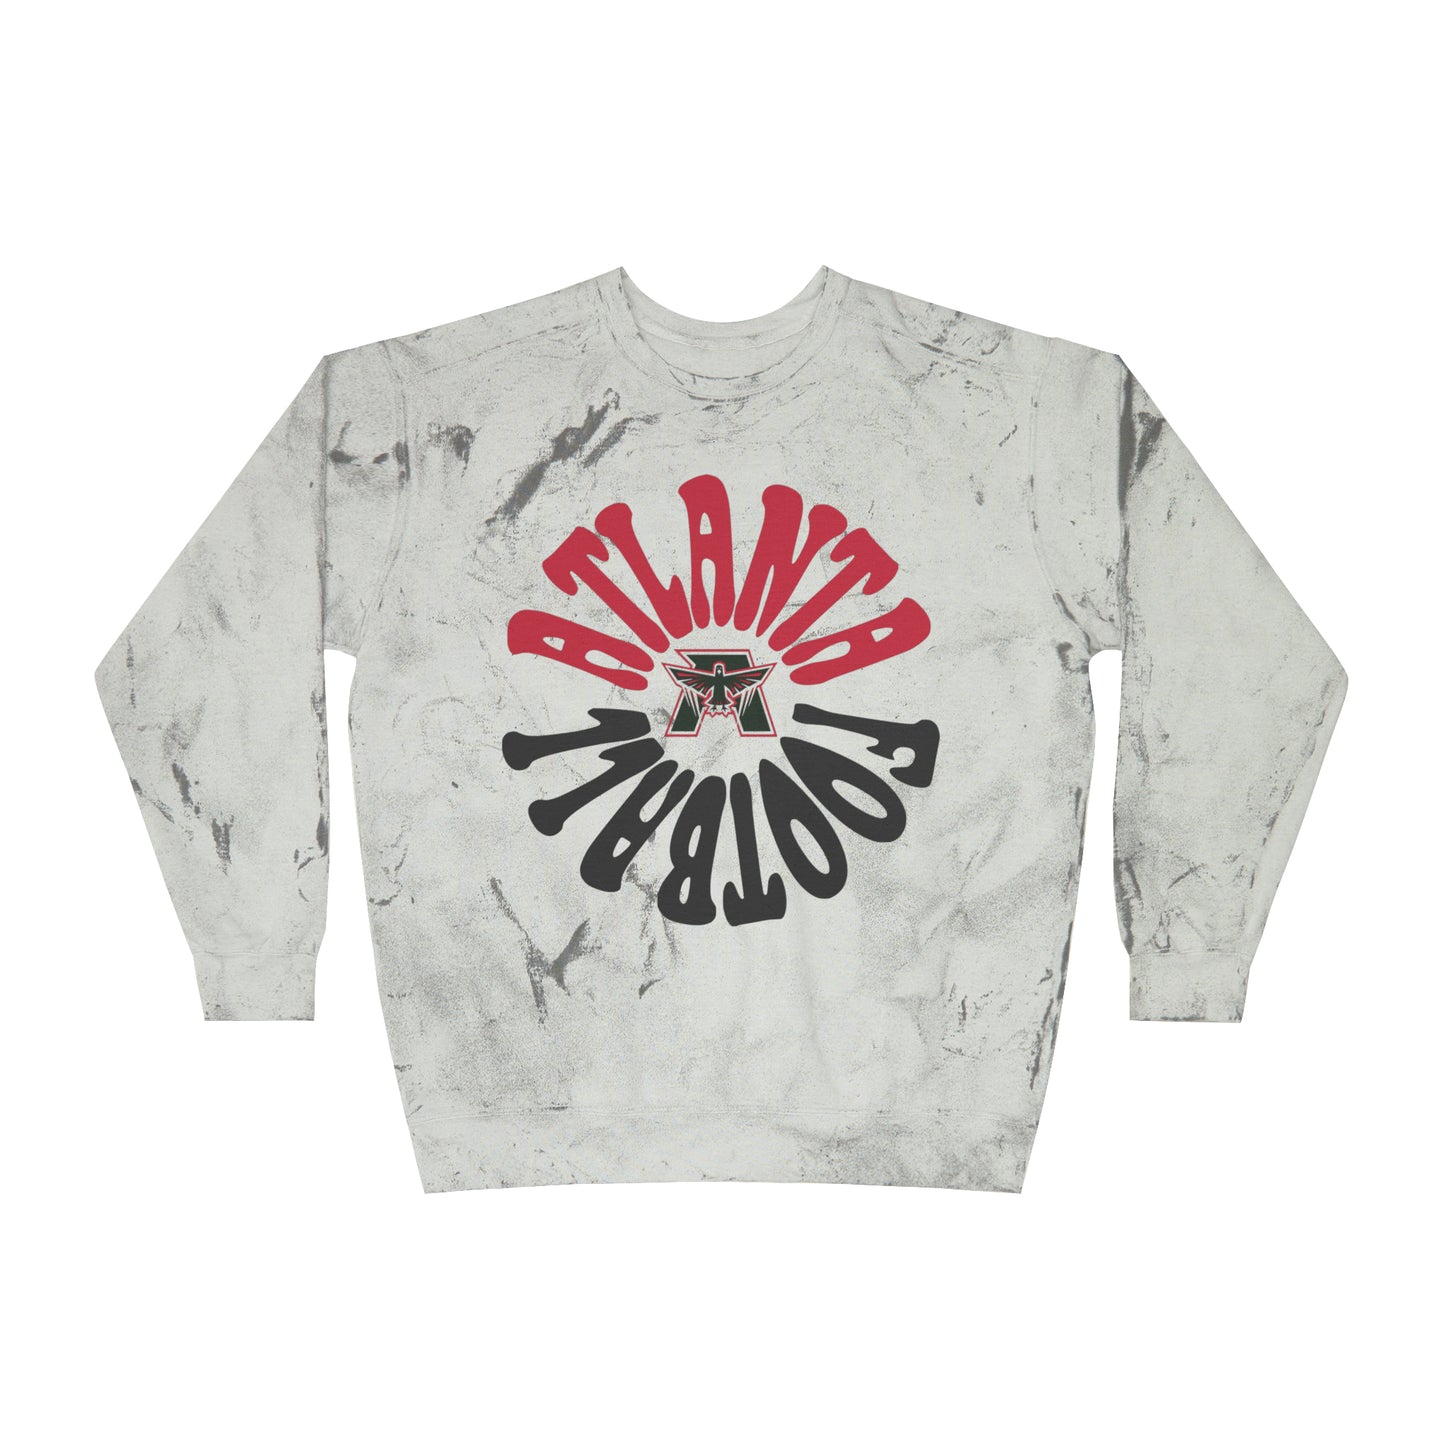 Tie Dye Comfort Colors Hippy Retro Atlanta Falcons Crewneck - Vintage Football Sweatshirt - Men's & Women's - Design 2 gray